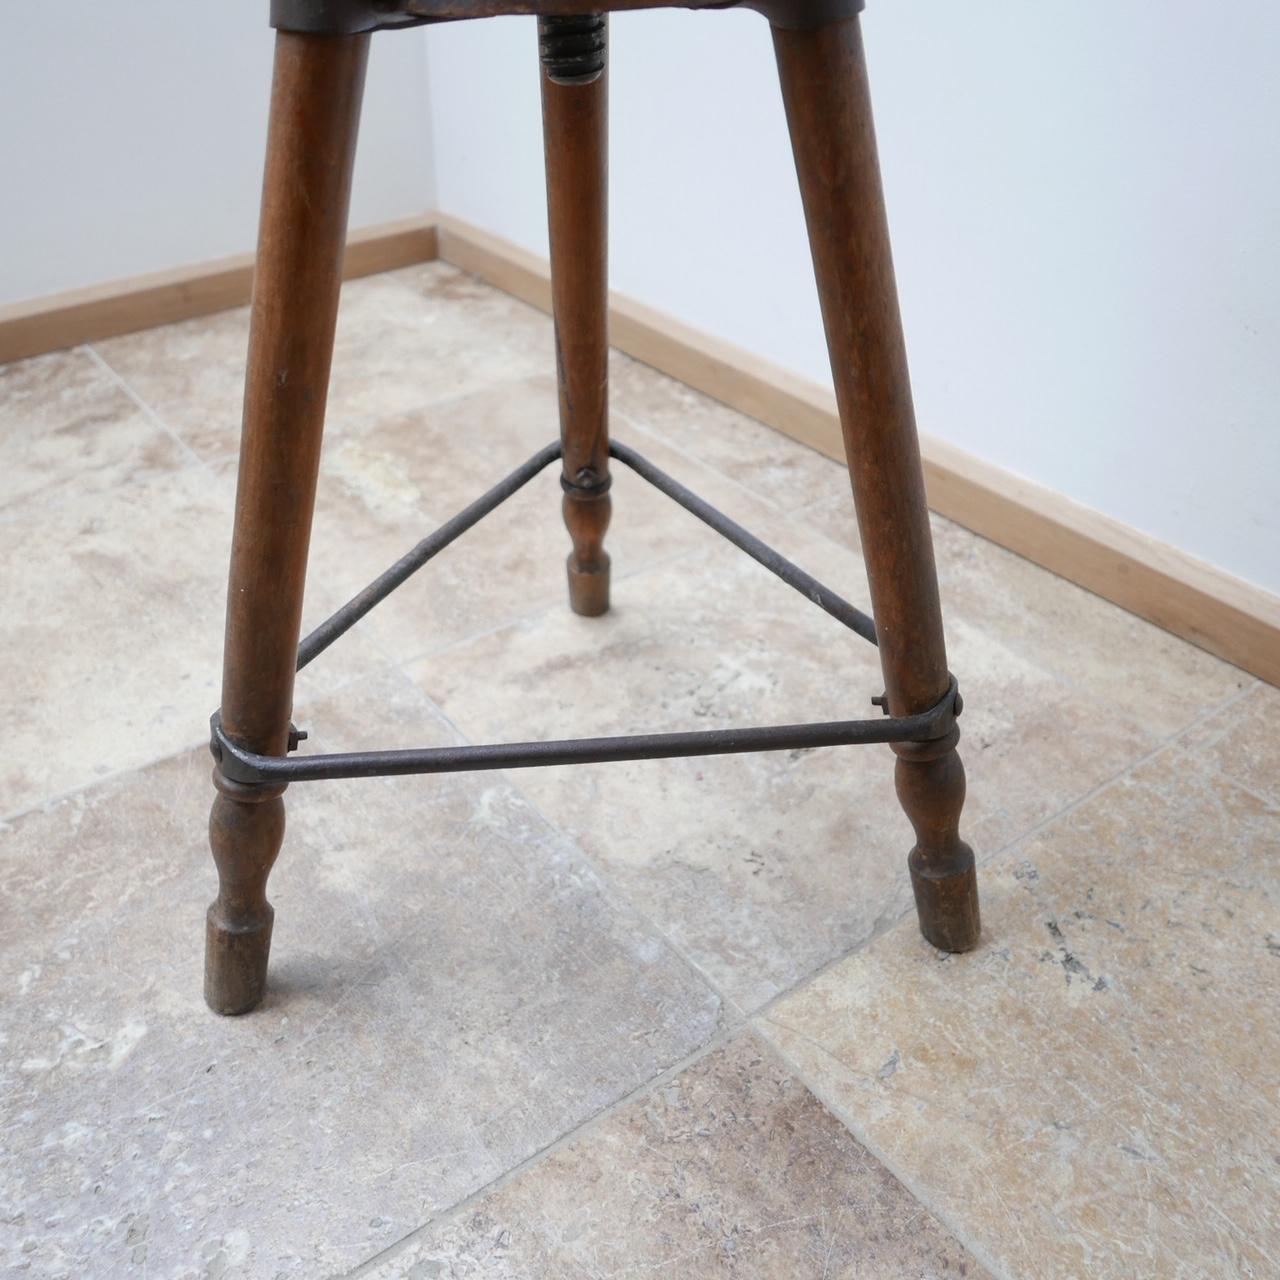 artist stool